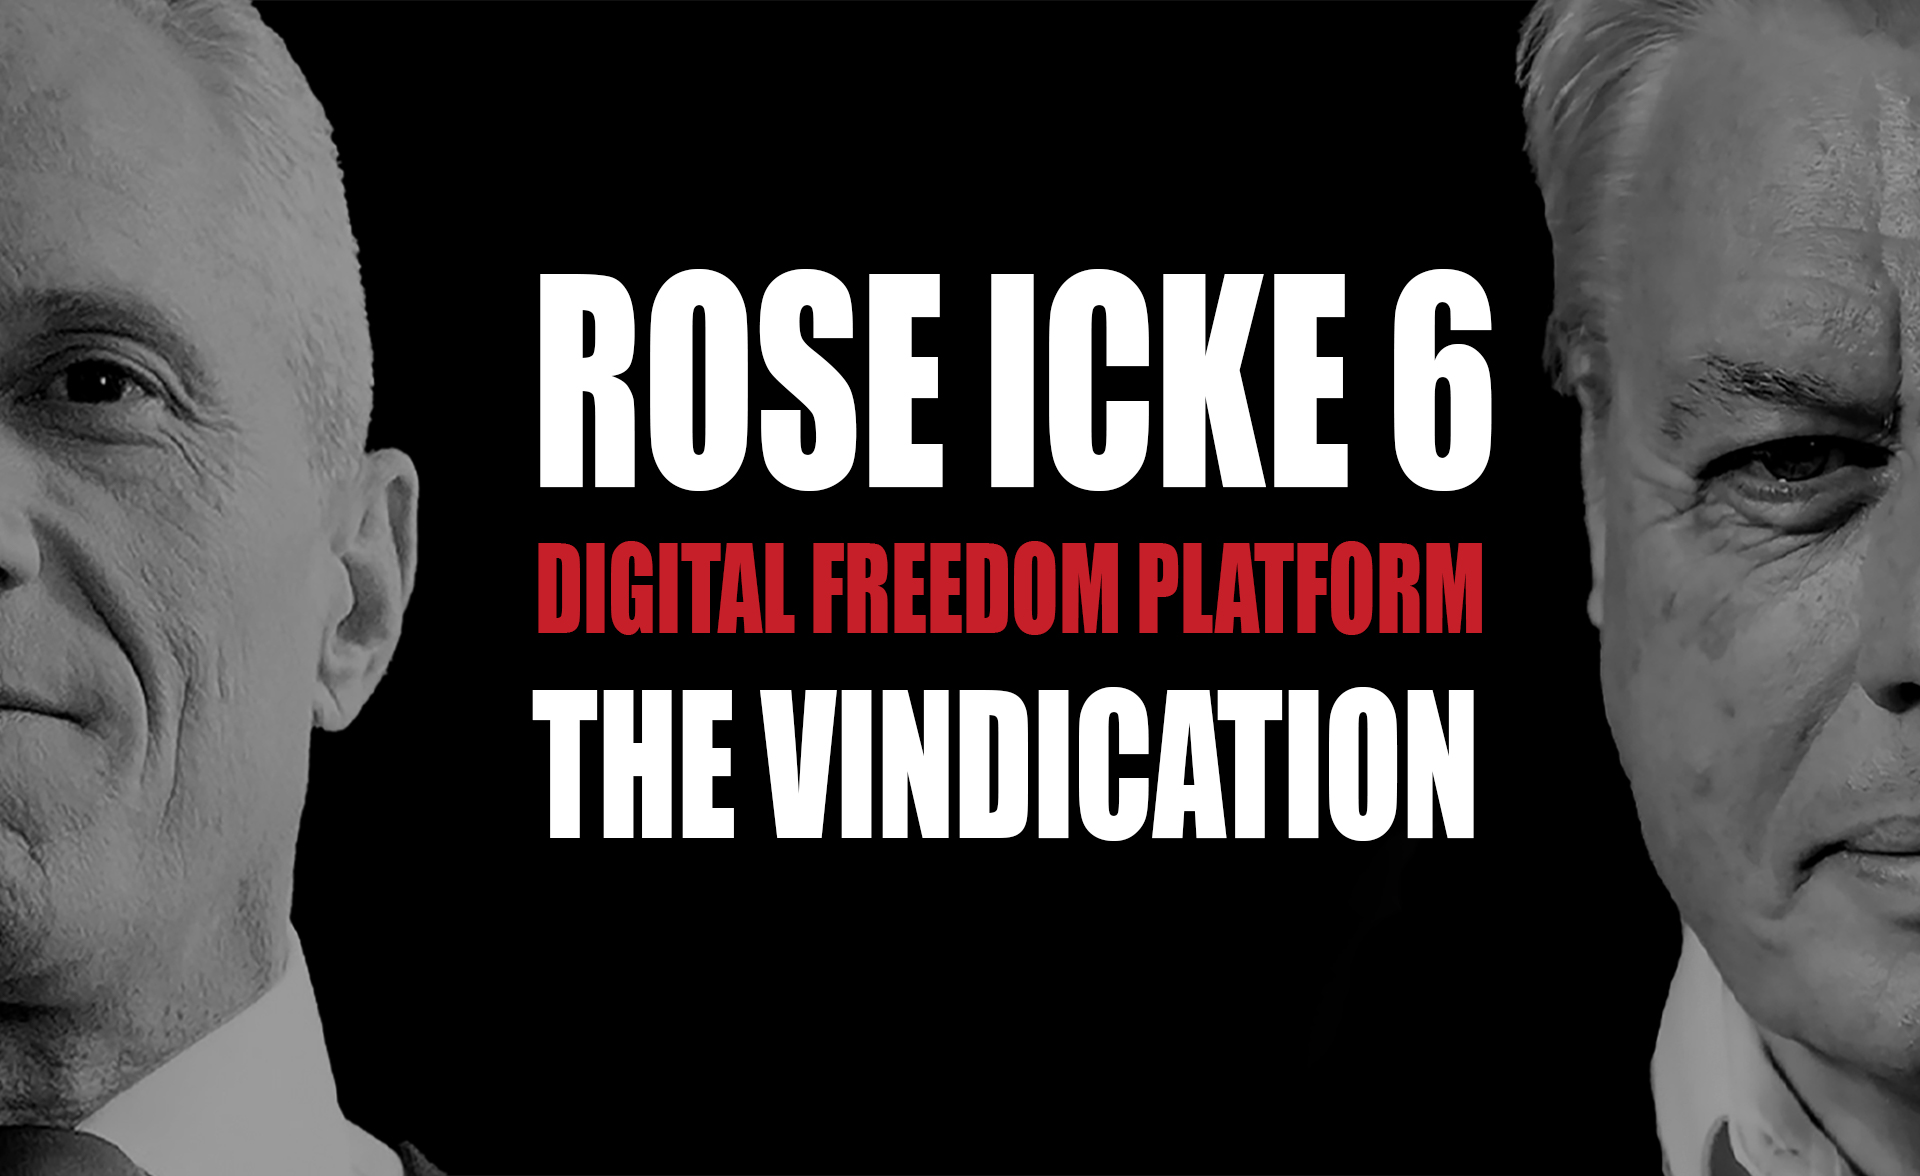 Ready go to ... https://freedomplatform.tv/rose-icke-6-the-vindication/ [ ROSE/ICKE 6: The Vindication - Digital Freedom Platform]